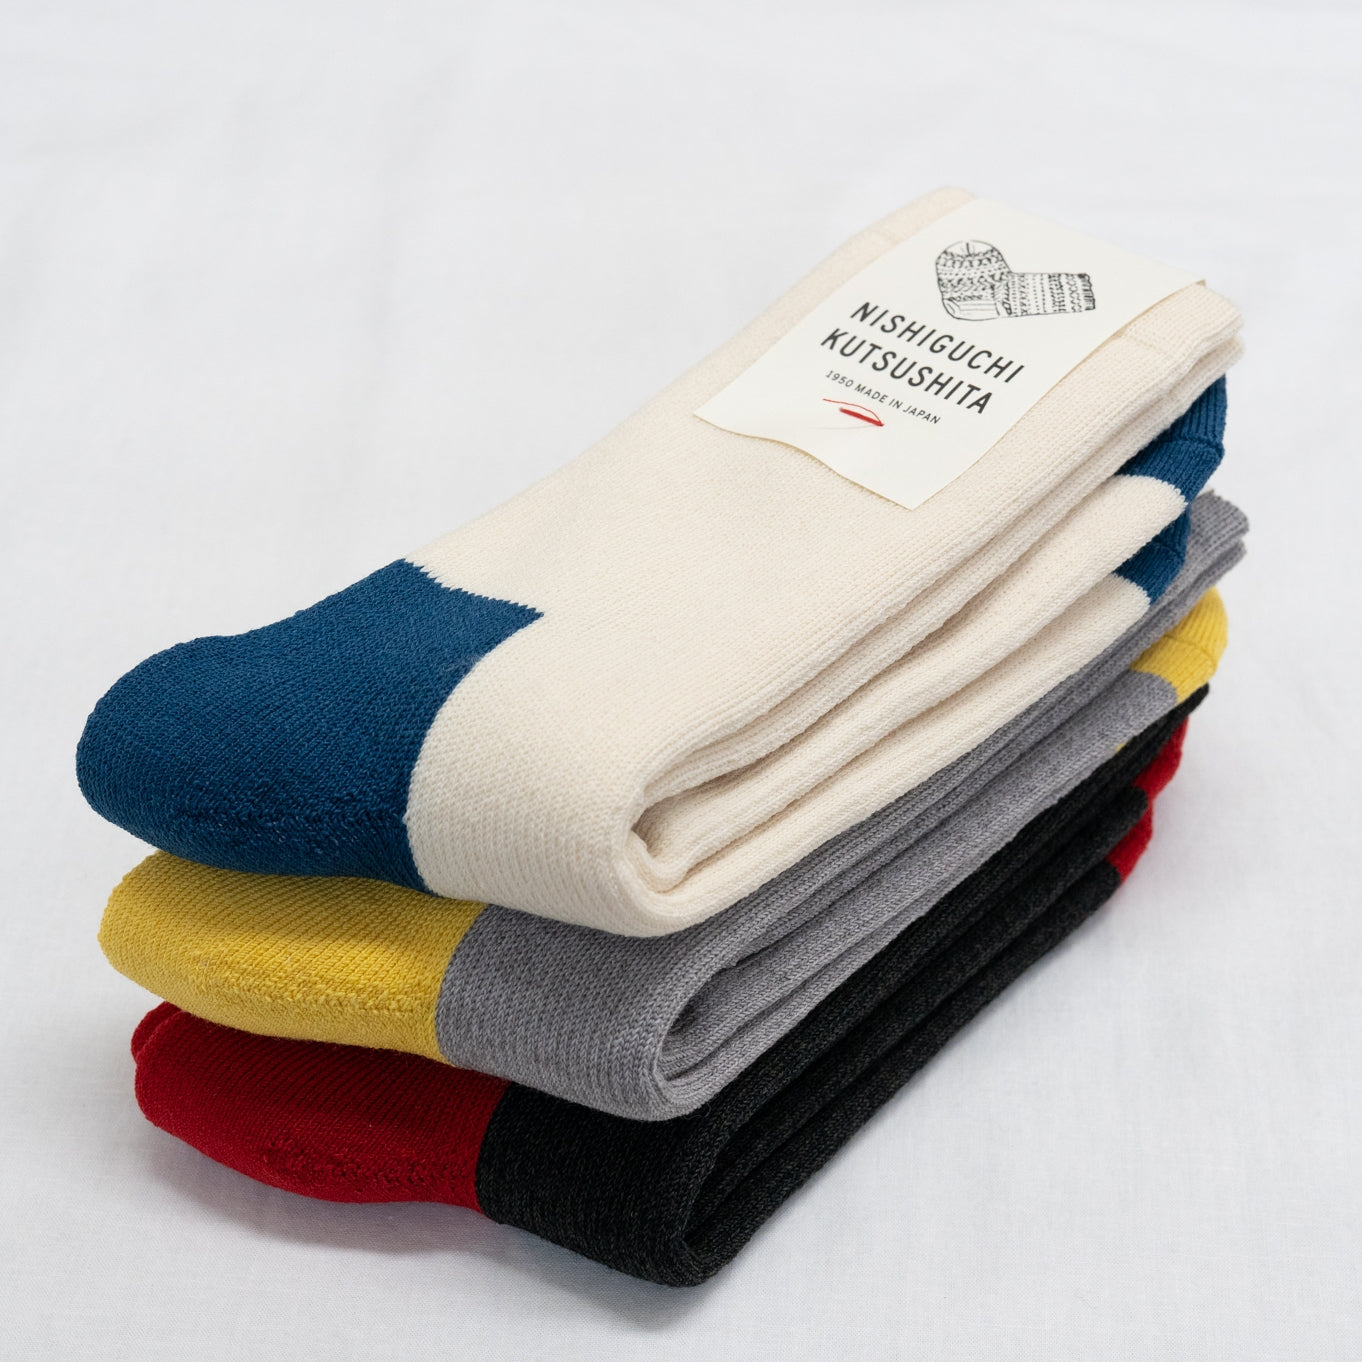 Nishiguchi Kutsushita Wool Pile Trail Socks - Ivory and Teal